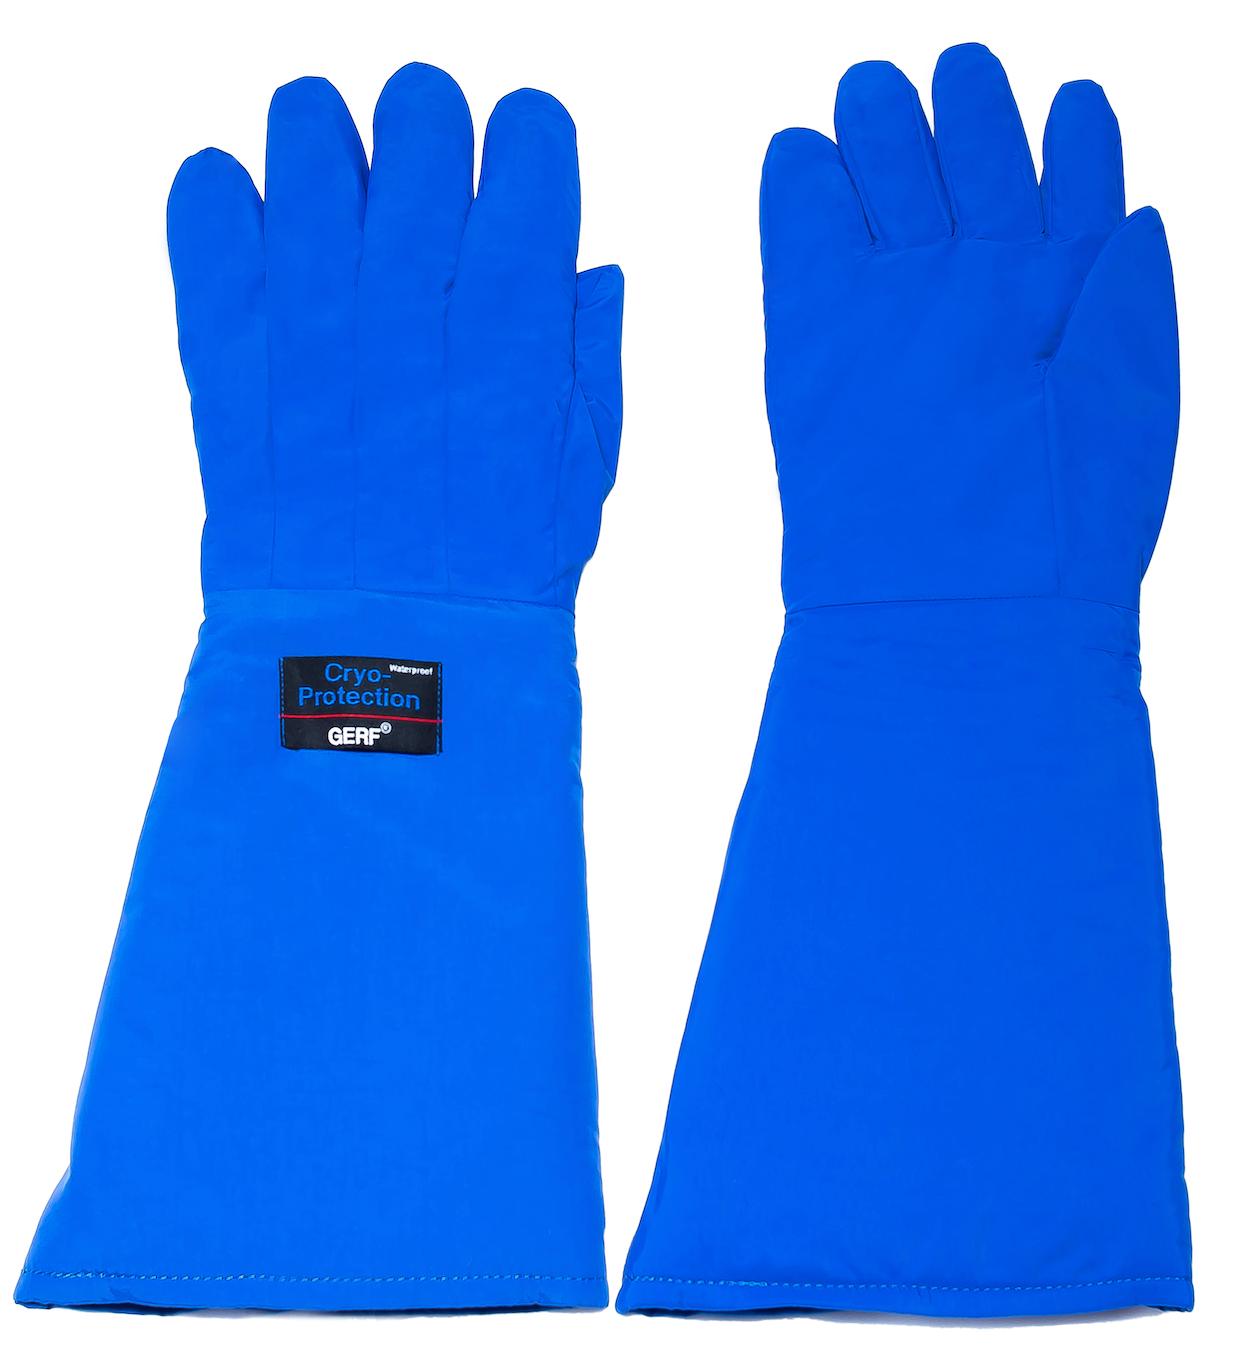 WATERPROOF CRYO GLOVES BEFORE ELBOW - GERF® Certified Safety Gloves